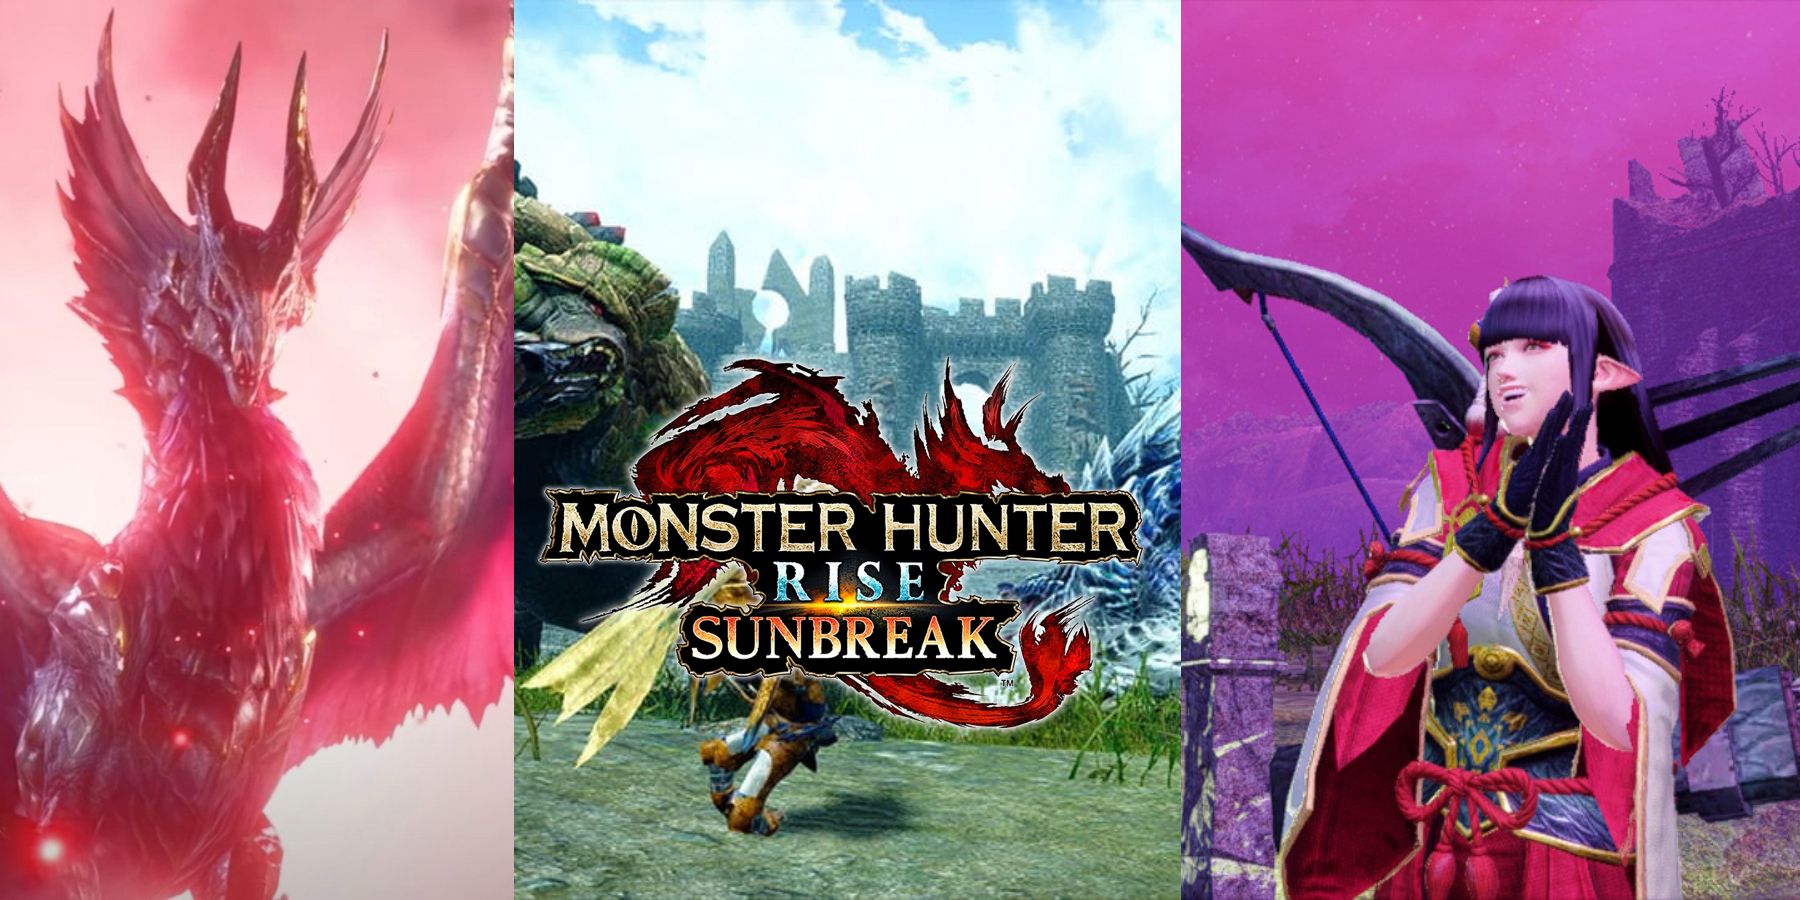 Monster Hunter Rise Sunbreak X NieR Final update - Monster Hunter：Rise Mod  - CaiMoGu game website